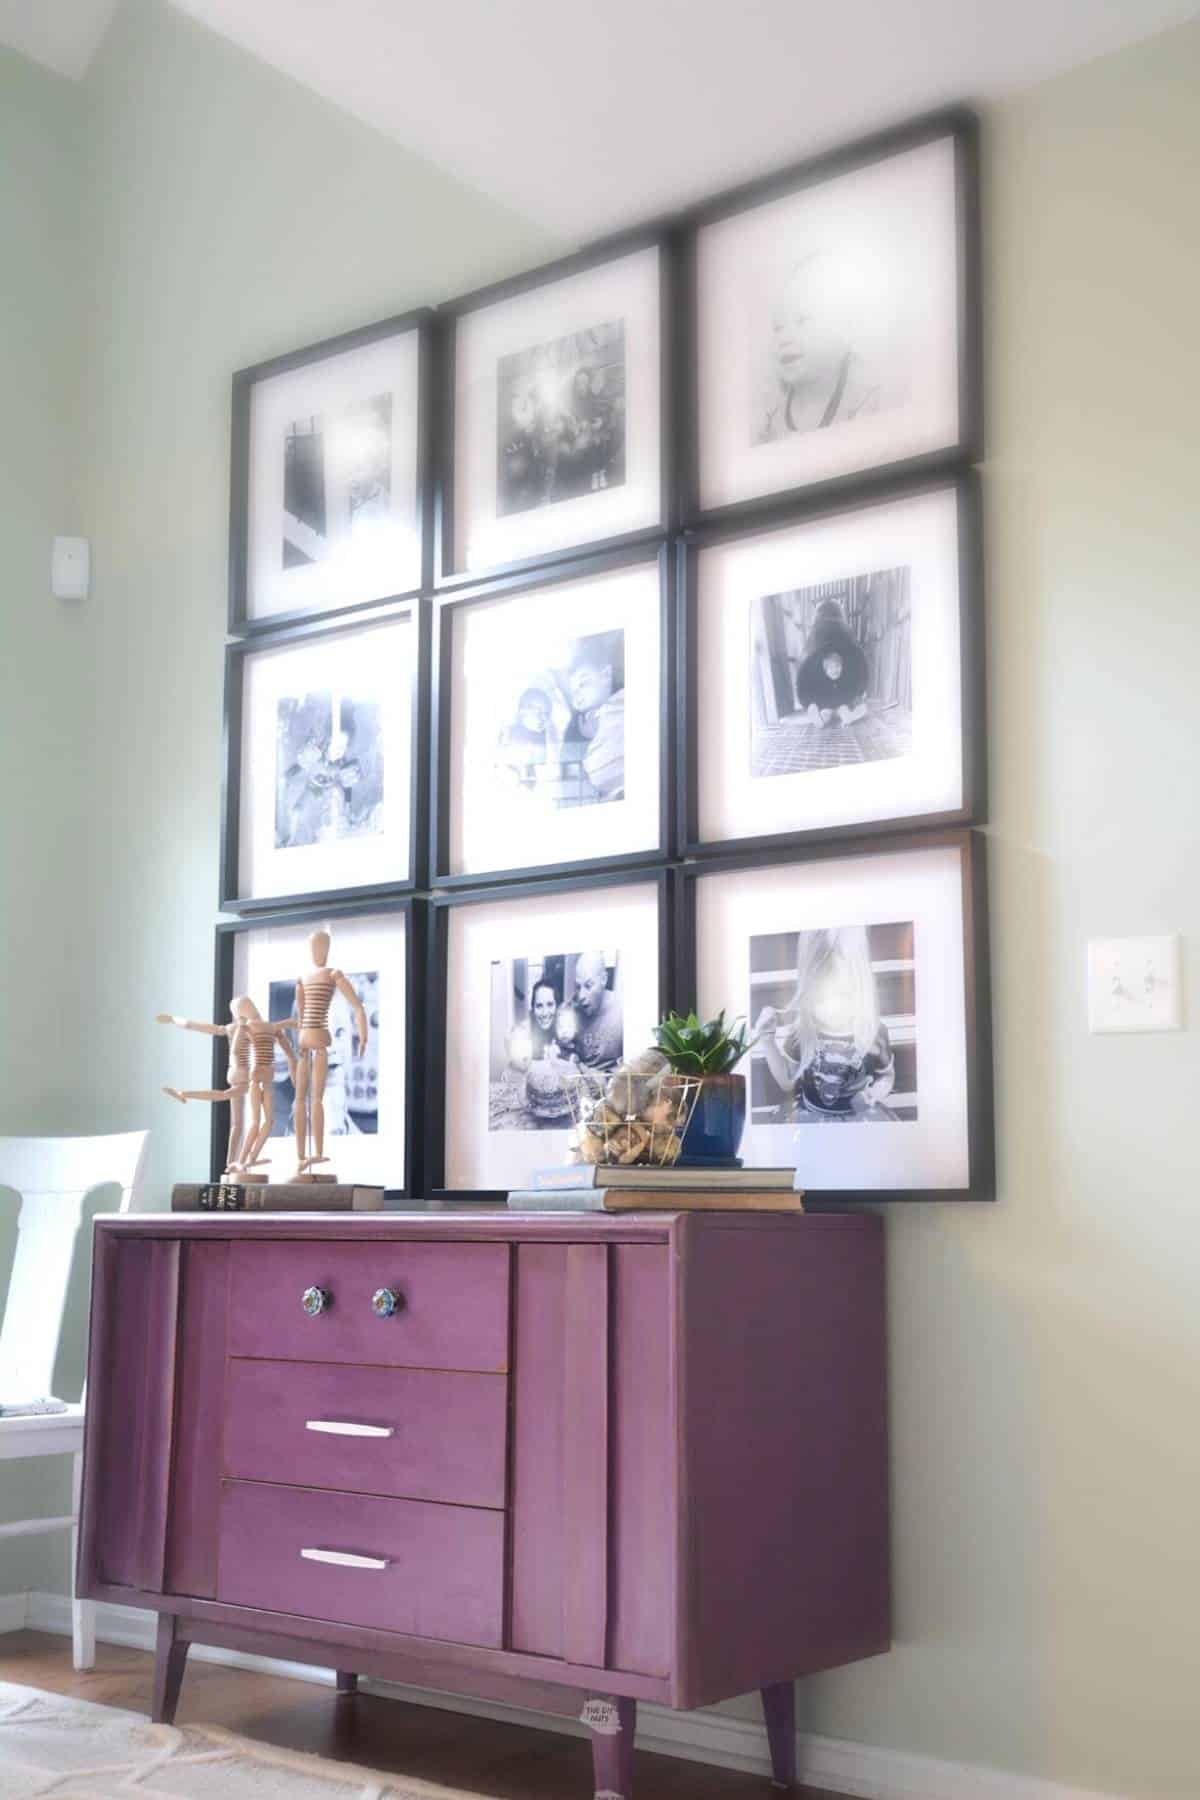 9 black frames on wall above purple dresser.